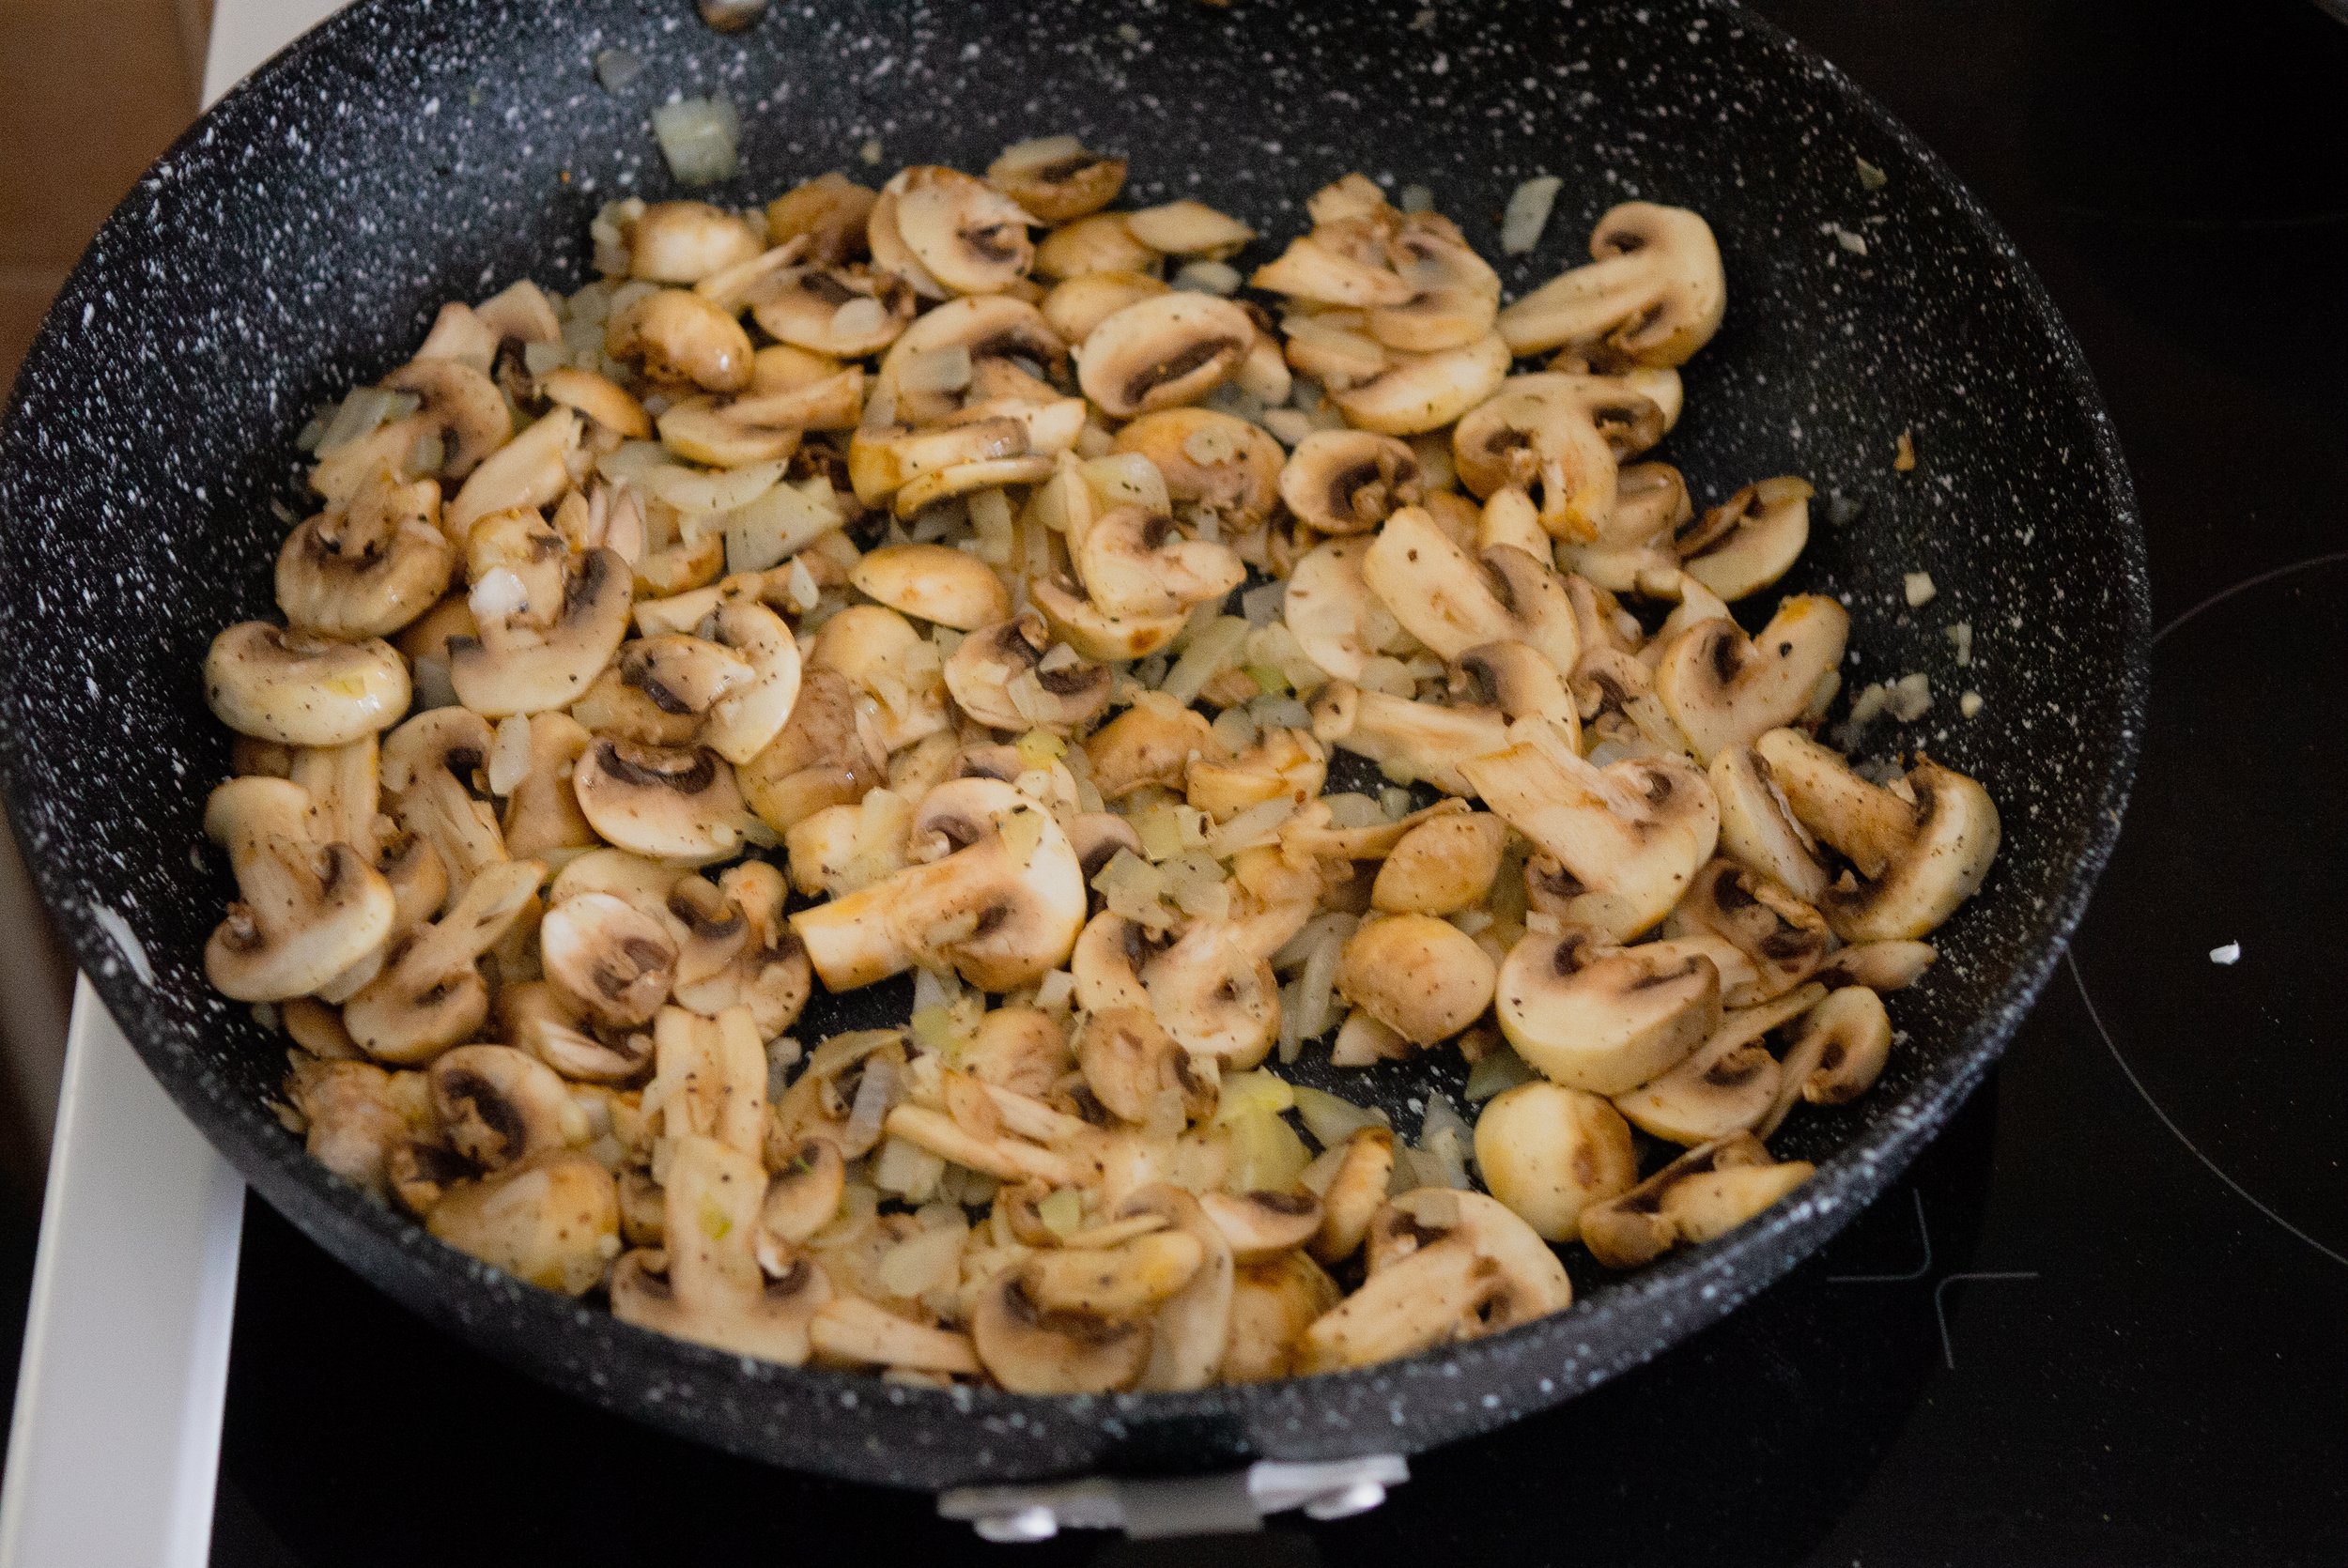 mushroom recipes easy  by kam sokhi allergy chef 